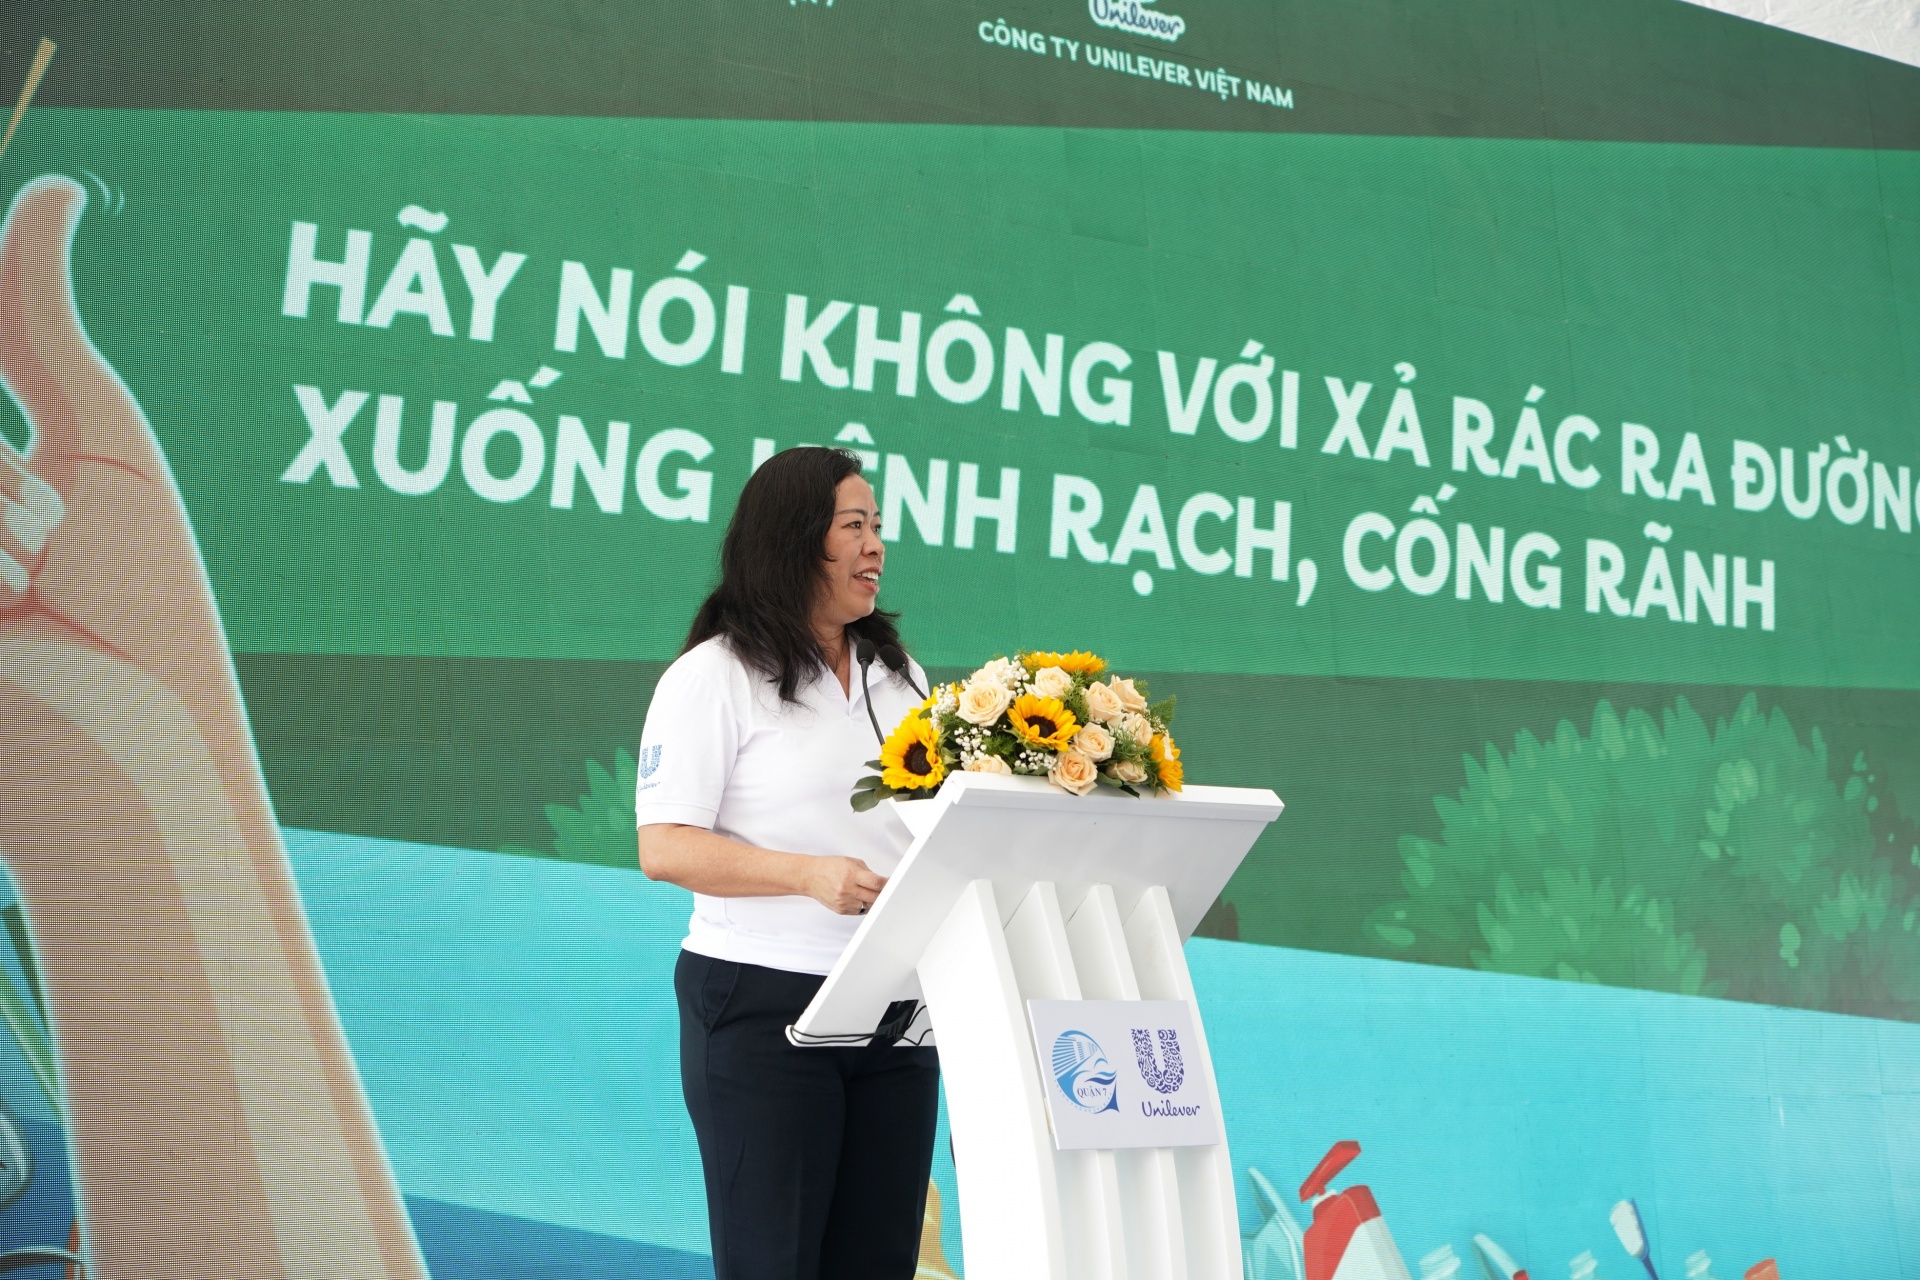 Unilever Vietnam promotes plastic waste segregation